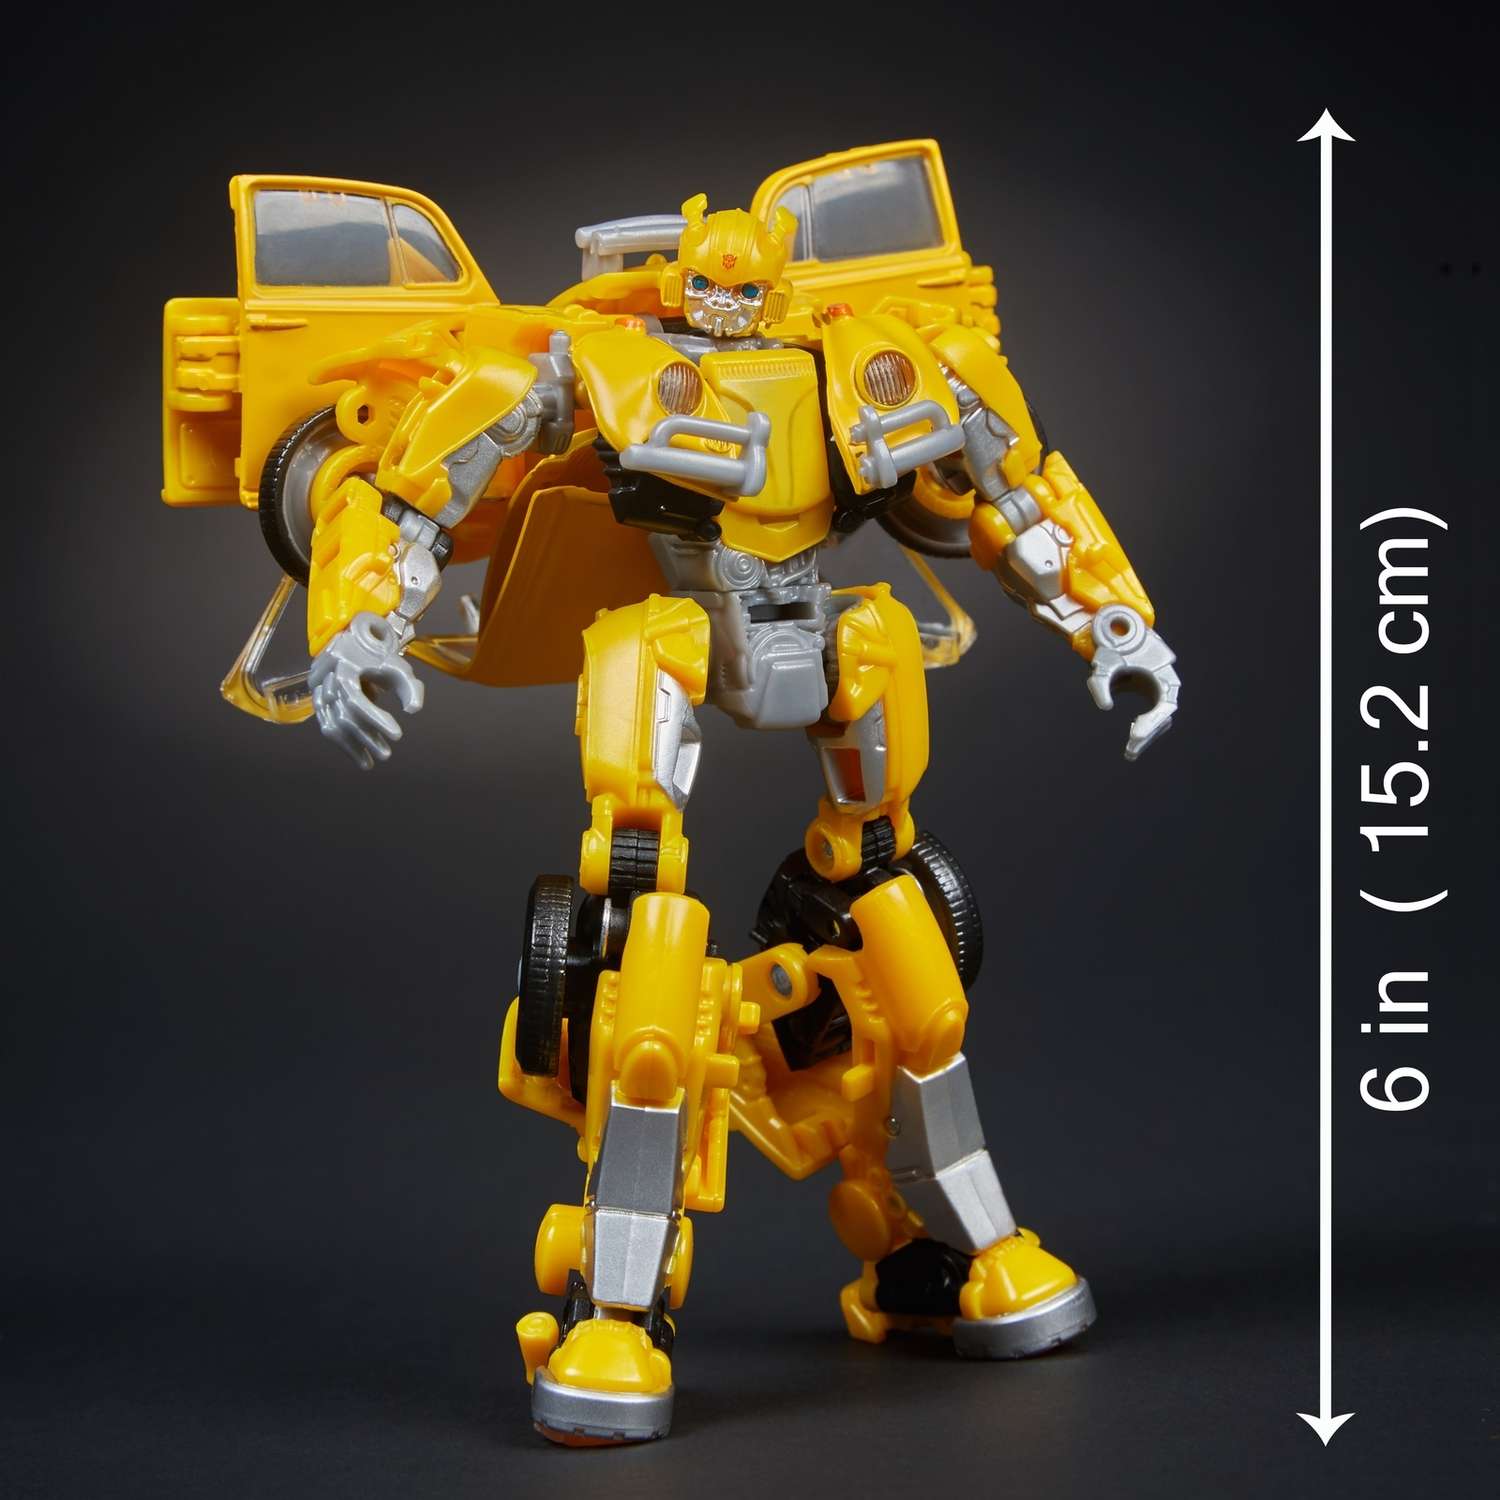 Игрушка Transformers Дженерейшнз Бамблби E0975EU4 - фото 5